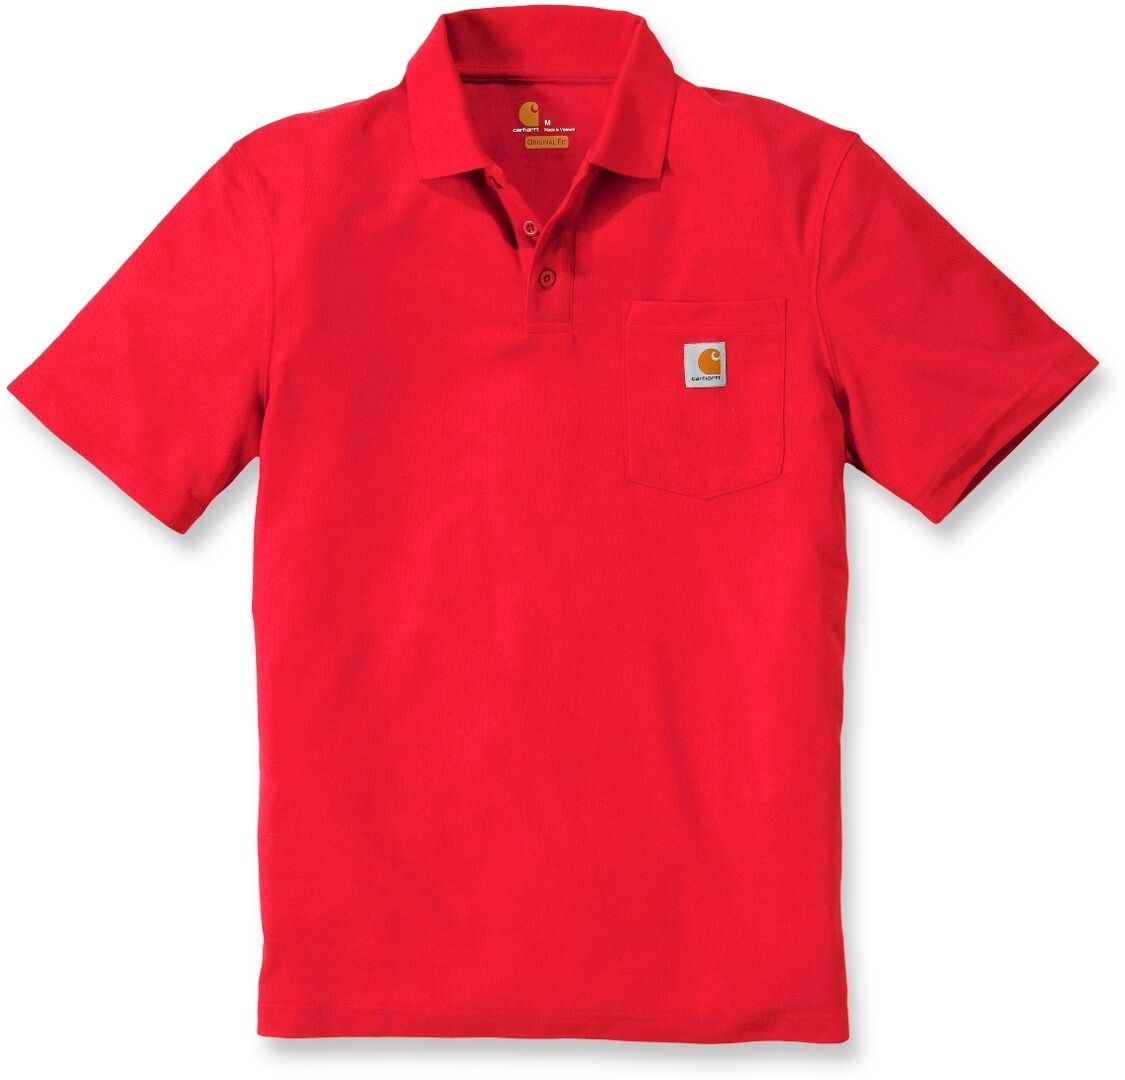 Carhartt Contractors Work Pocket Polo Shirt Polokošile M červená